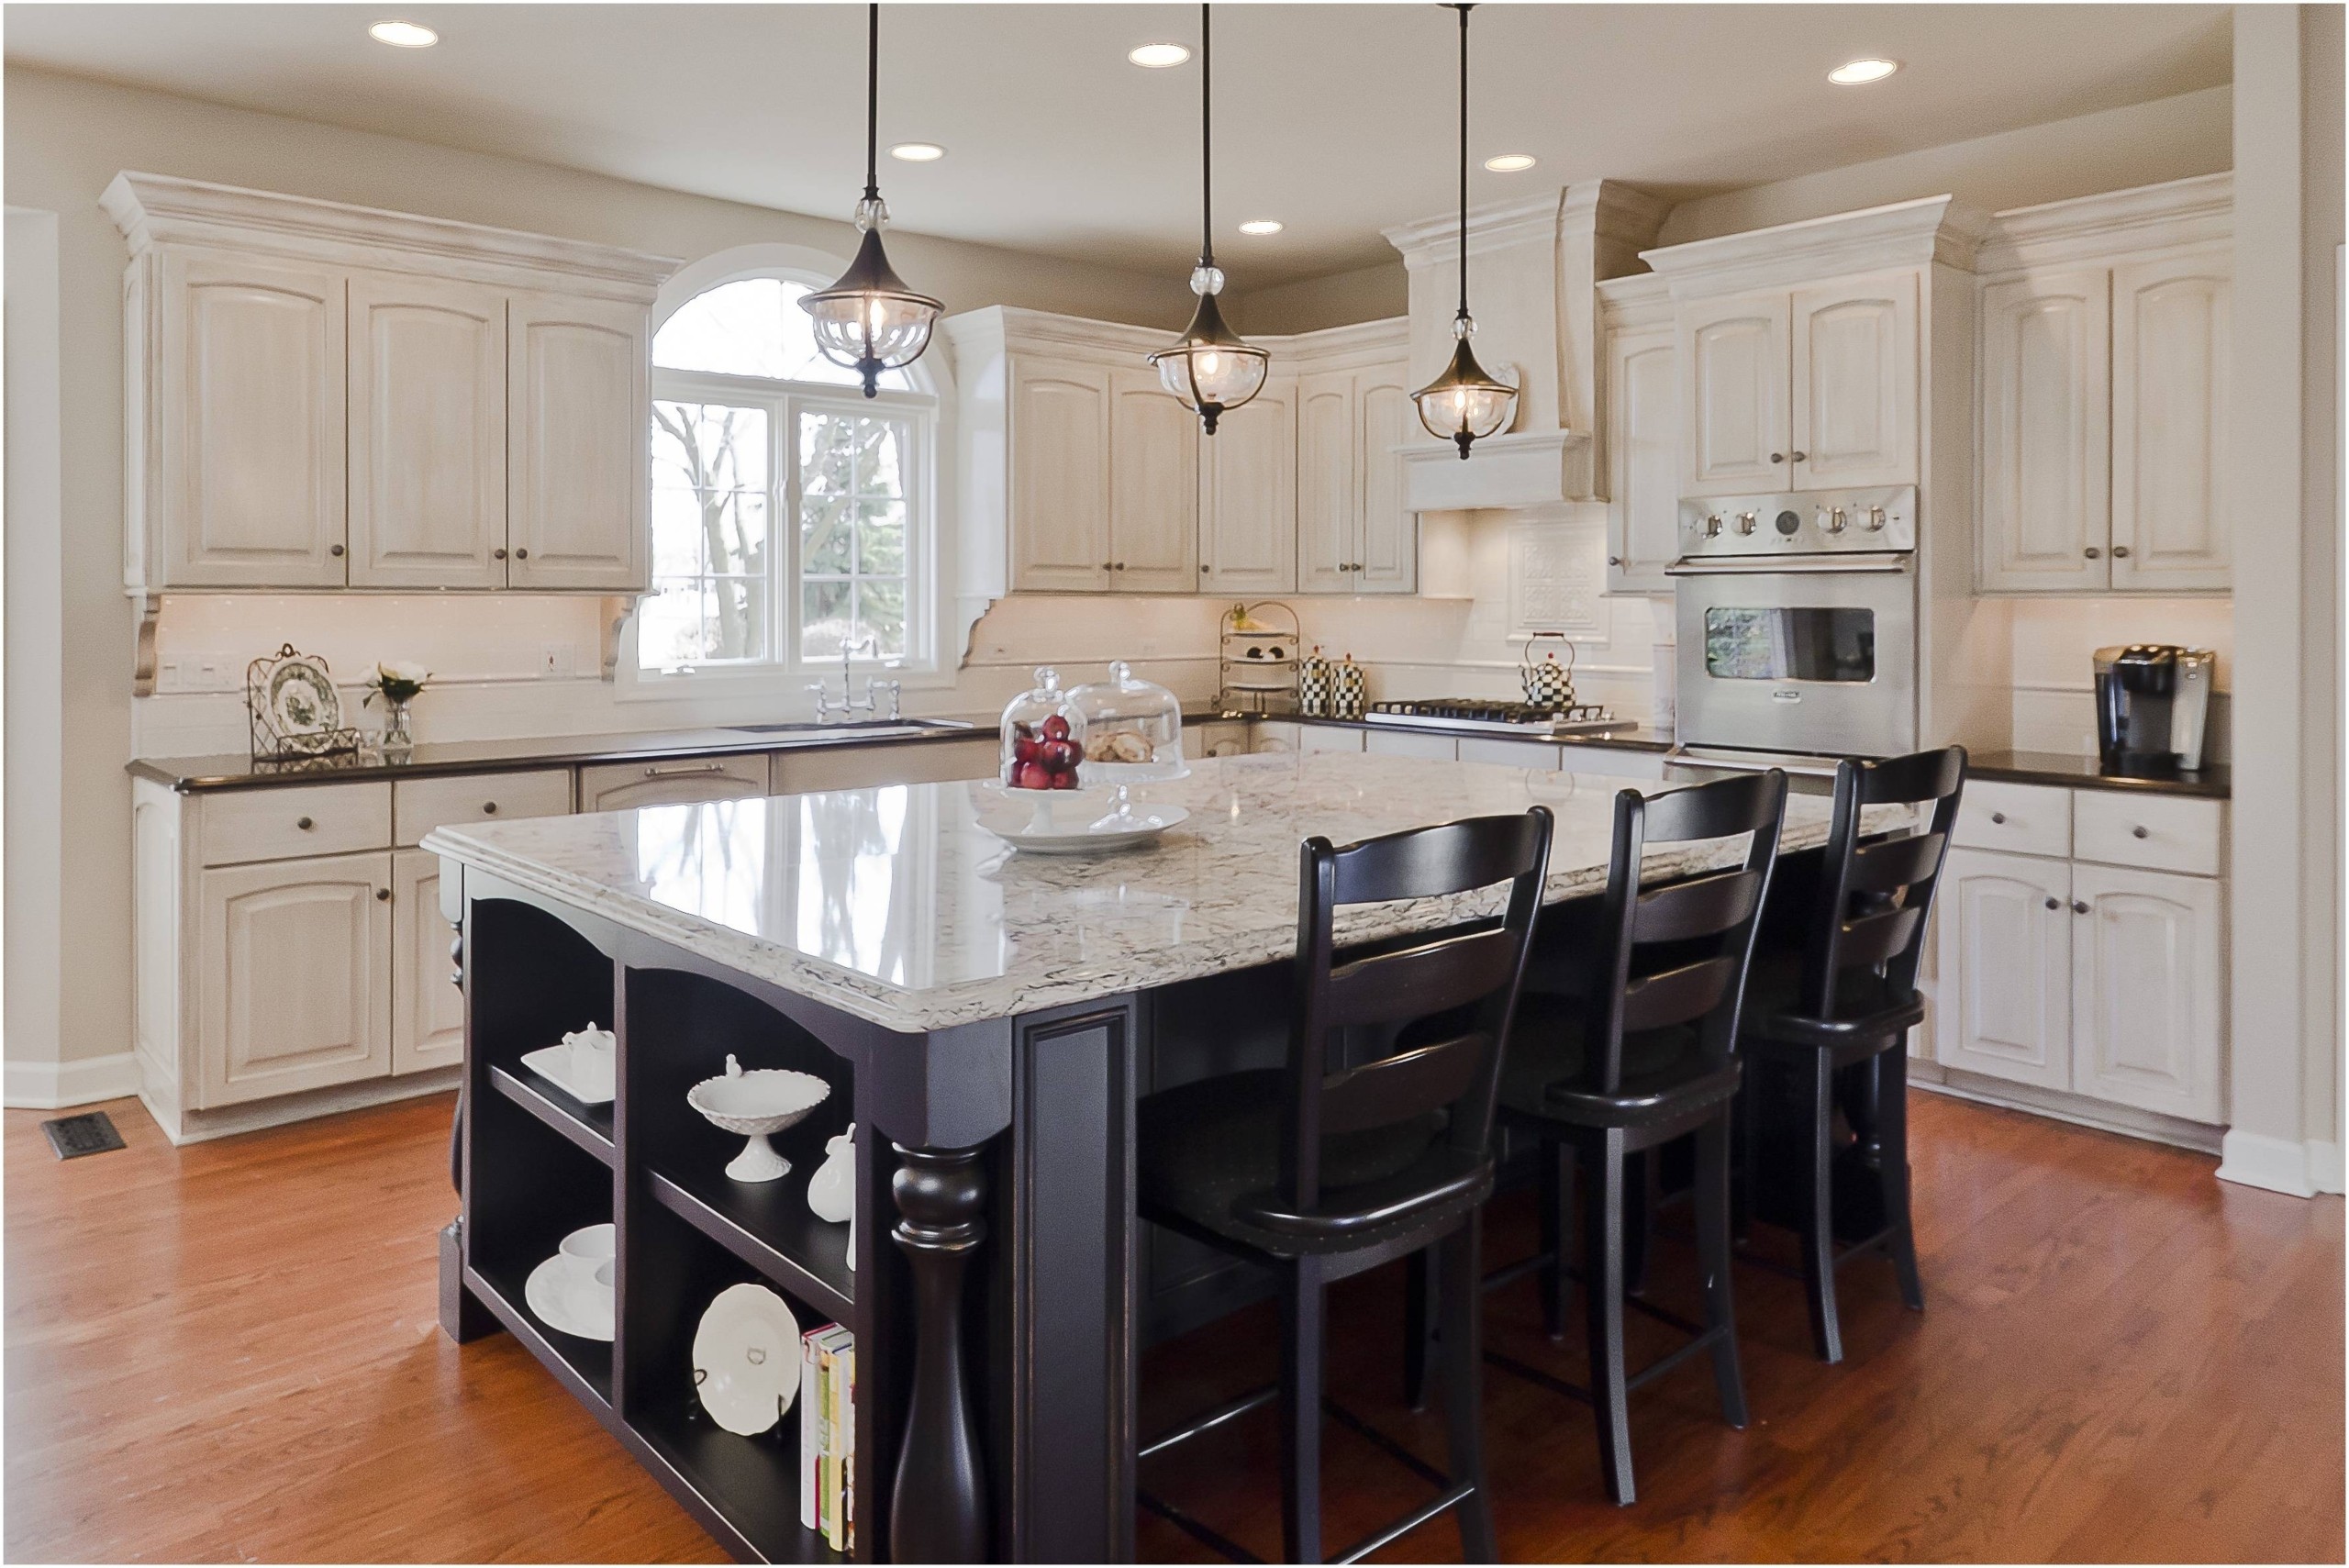 Rustic style kitchen island lighting over white gloss granite top